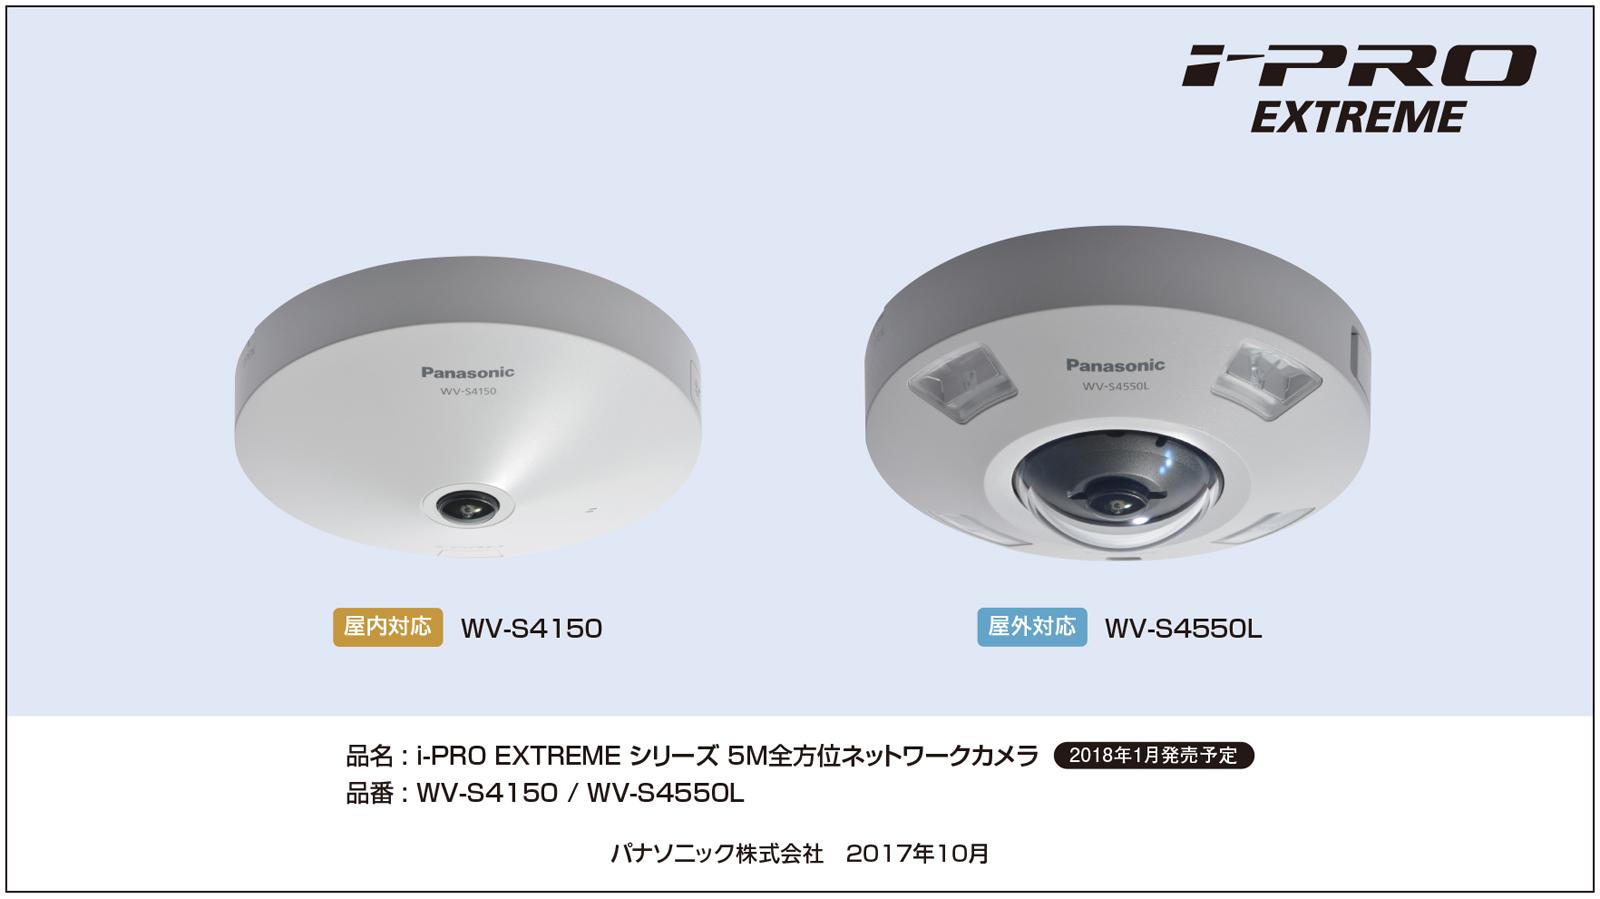 i-PRO EXTREME シリーズ 5M全方位ネットワークカメラ2機種「WV-S4150、WV-S4550L」